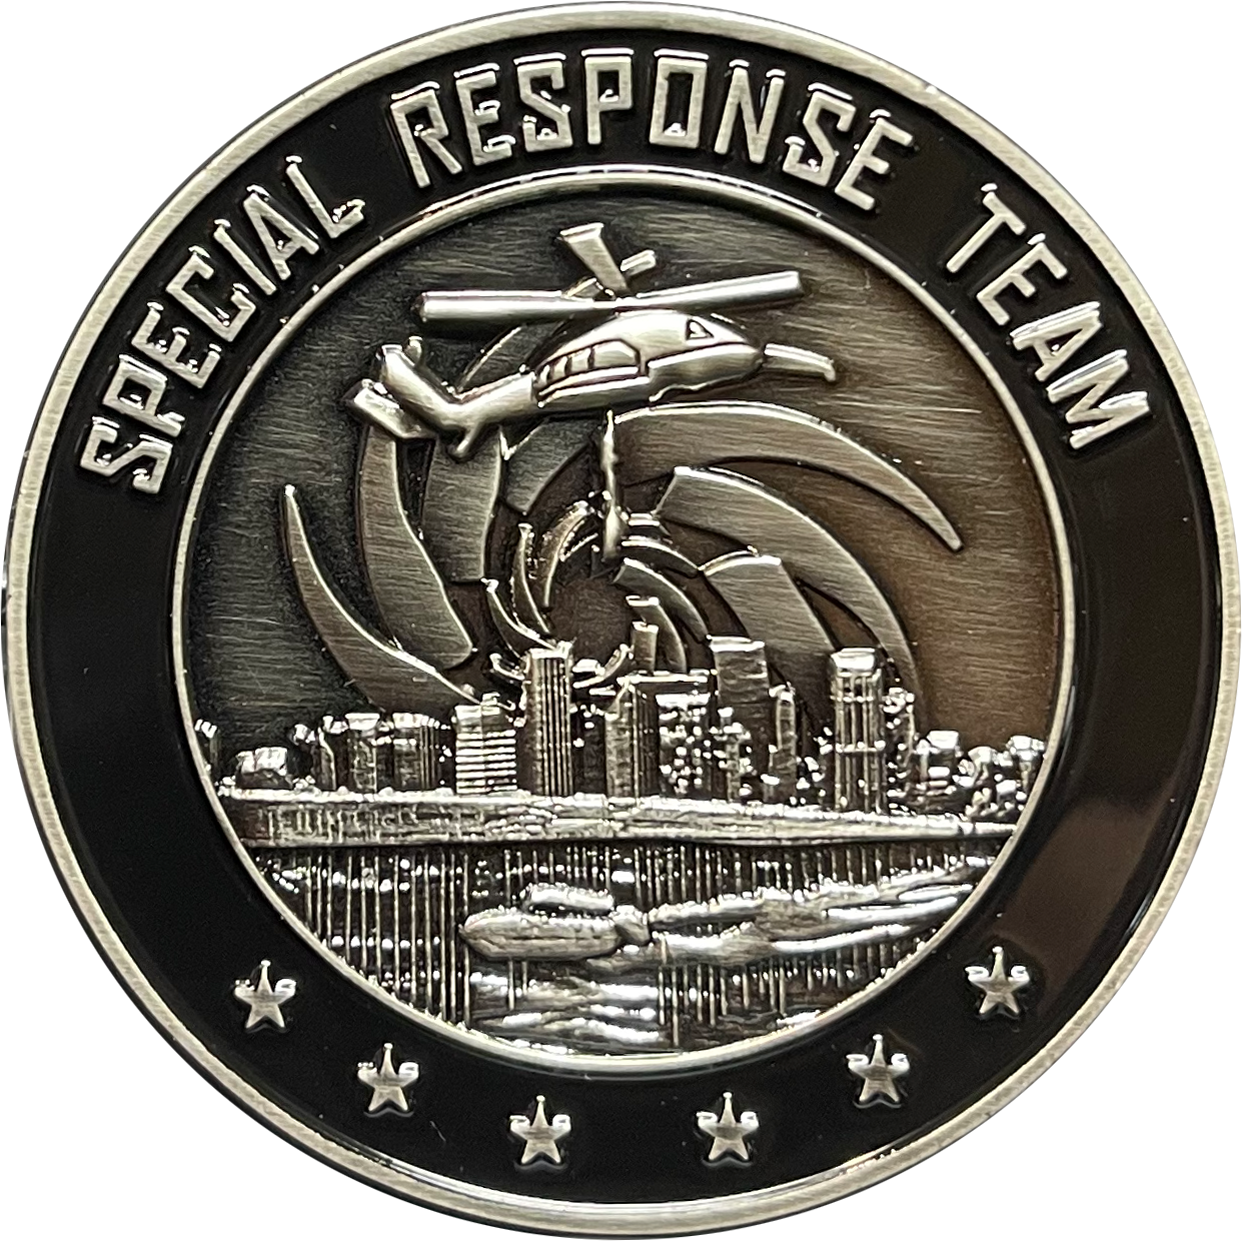 BL6-003 SRT Special Response Team CBP CBPO Tactical Operator Border